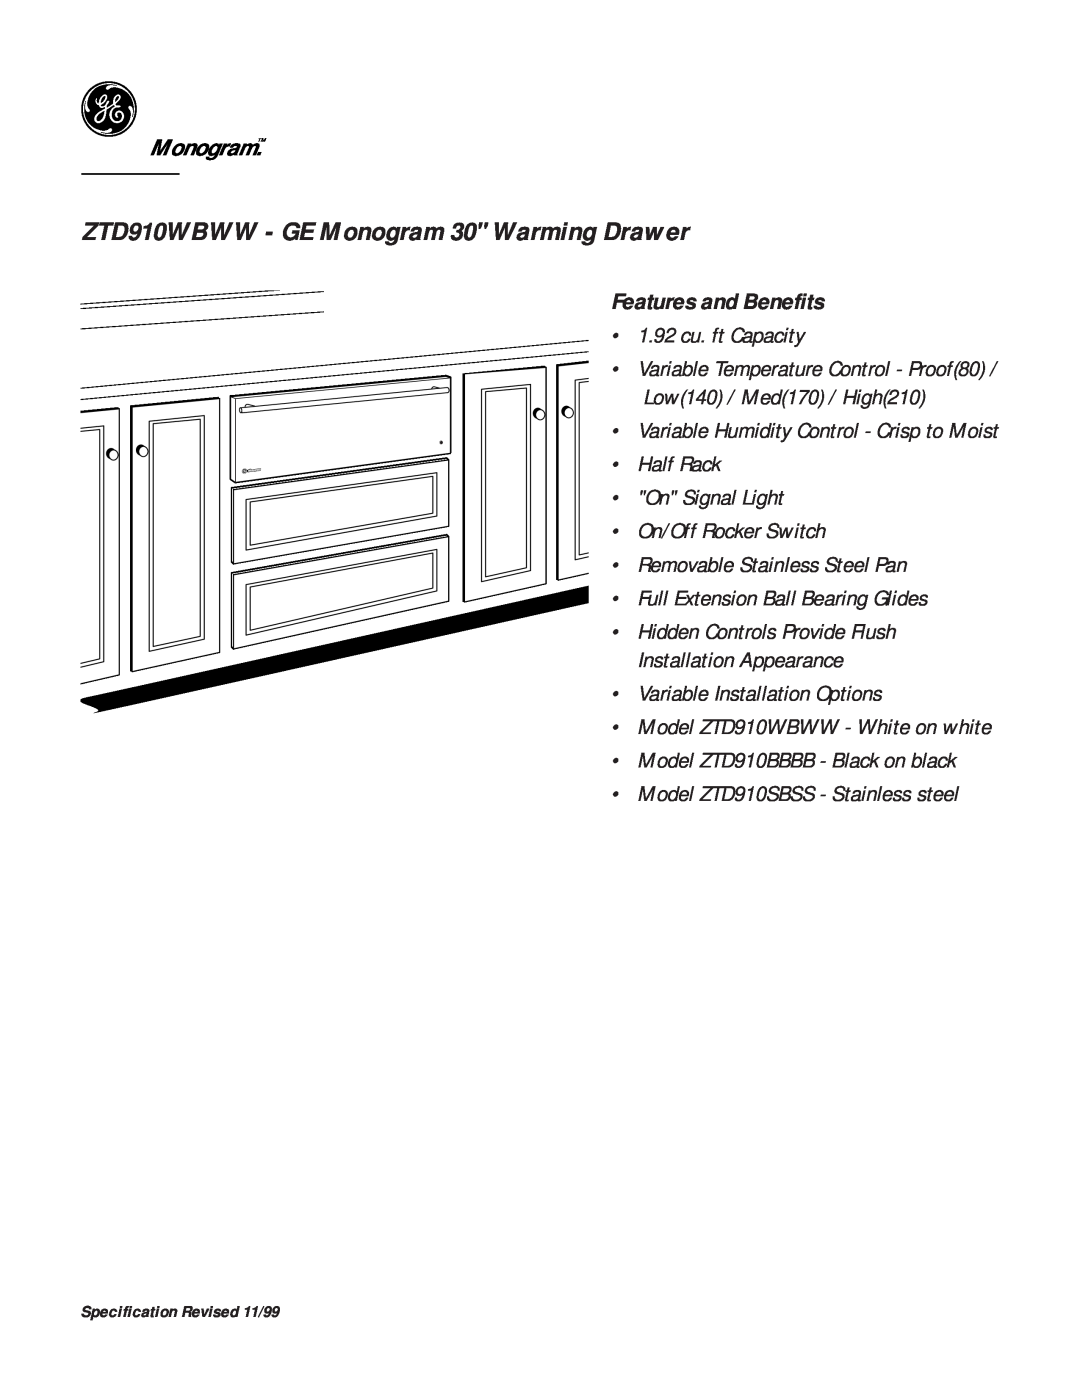 GE Monogram dimensions Features and Benefits, ZTD910WBWW - GE Monogram 30 Warming Drawer, 1.92 cu. ft Capacity 